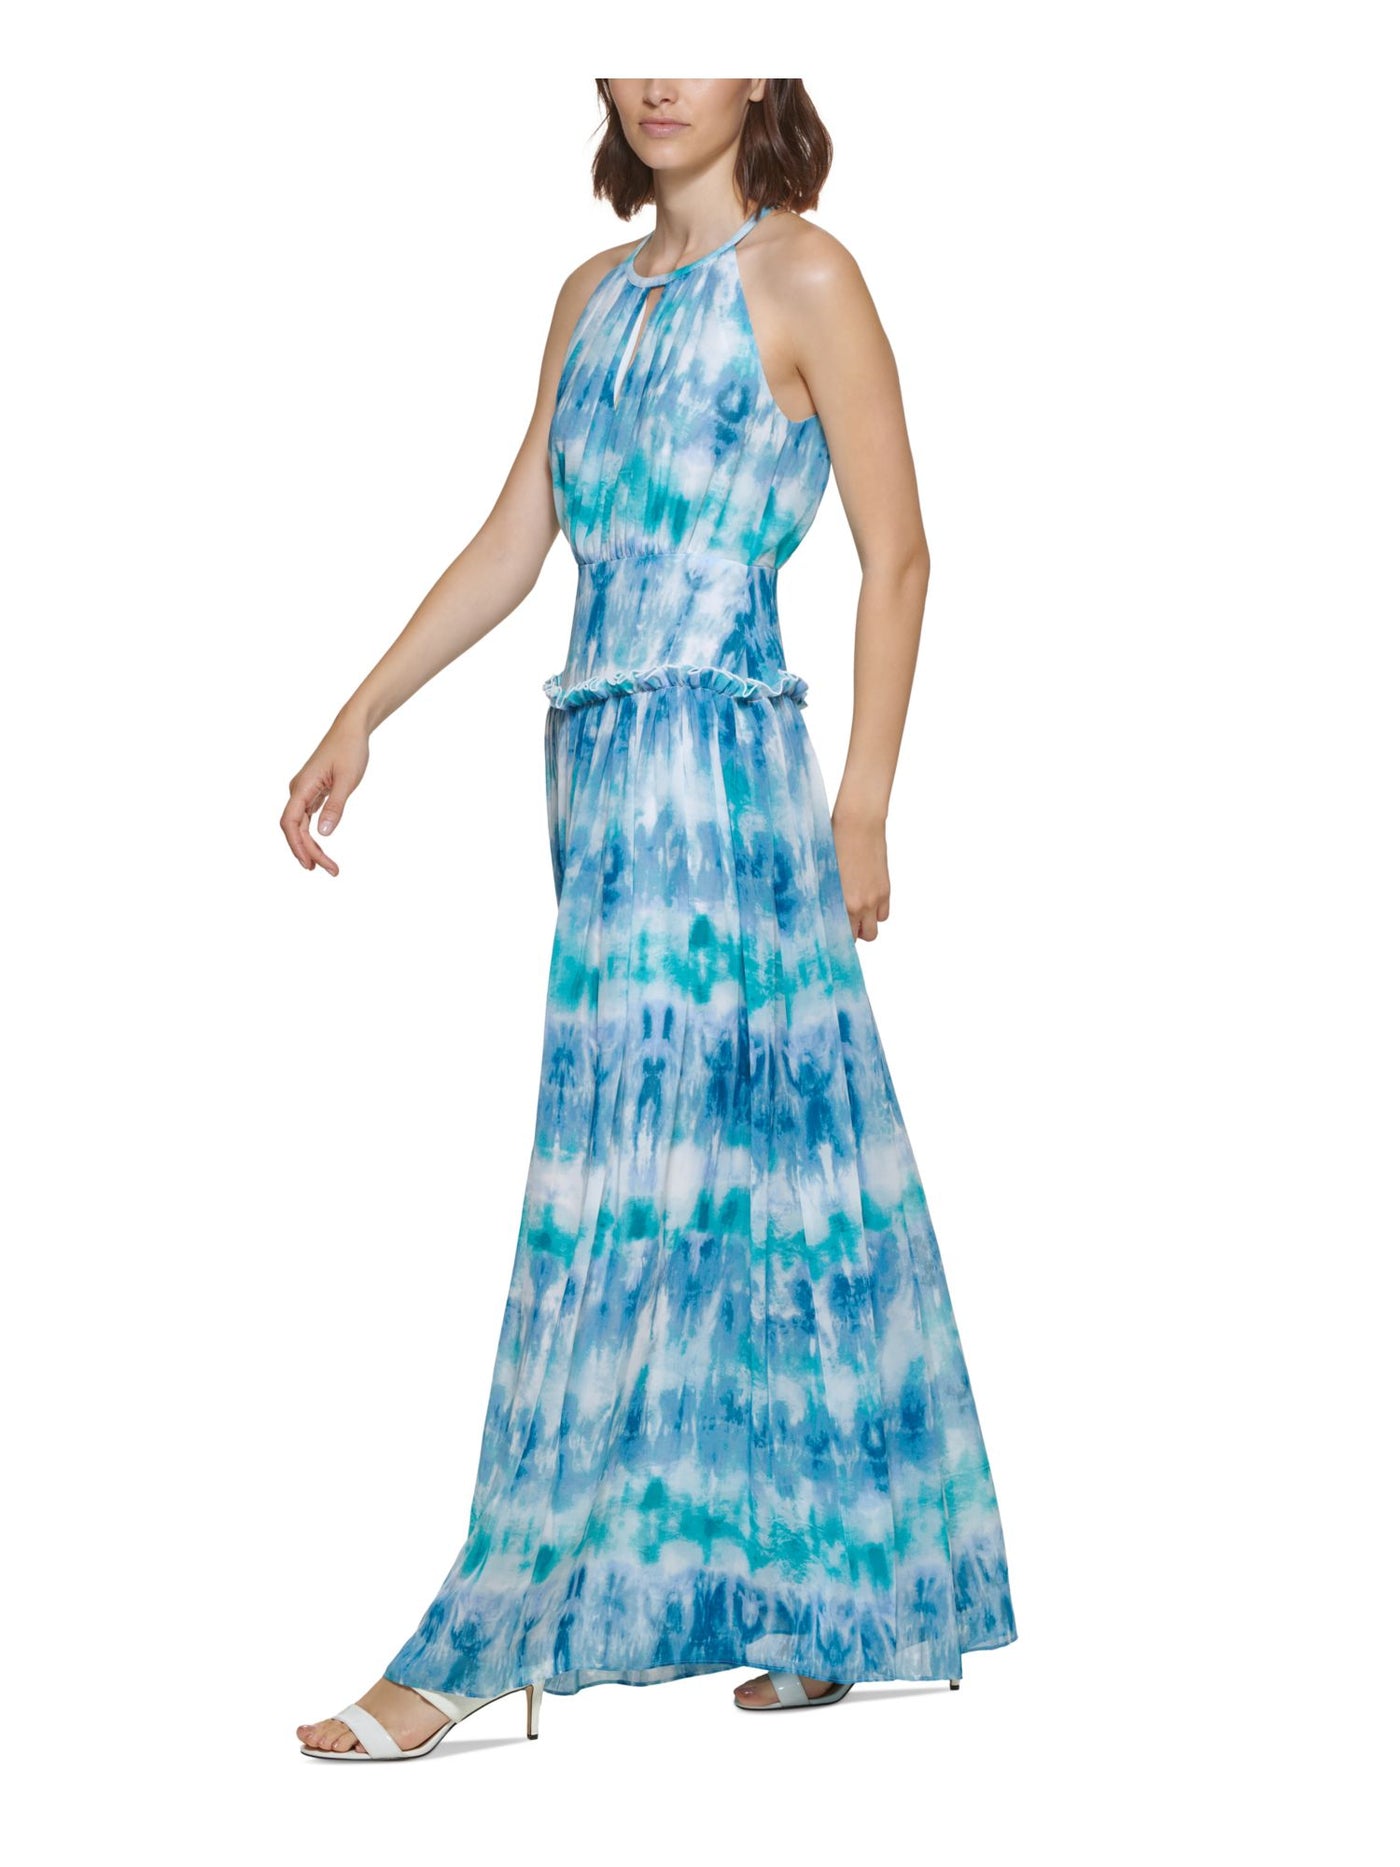 CALVIN KLEIN Womens Blue Zippered Cut Out Ruffle Trim Tie Dye Sleeveless Round Neck Full-Length Formal Gown Dress 8